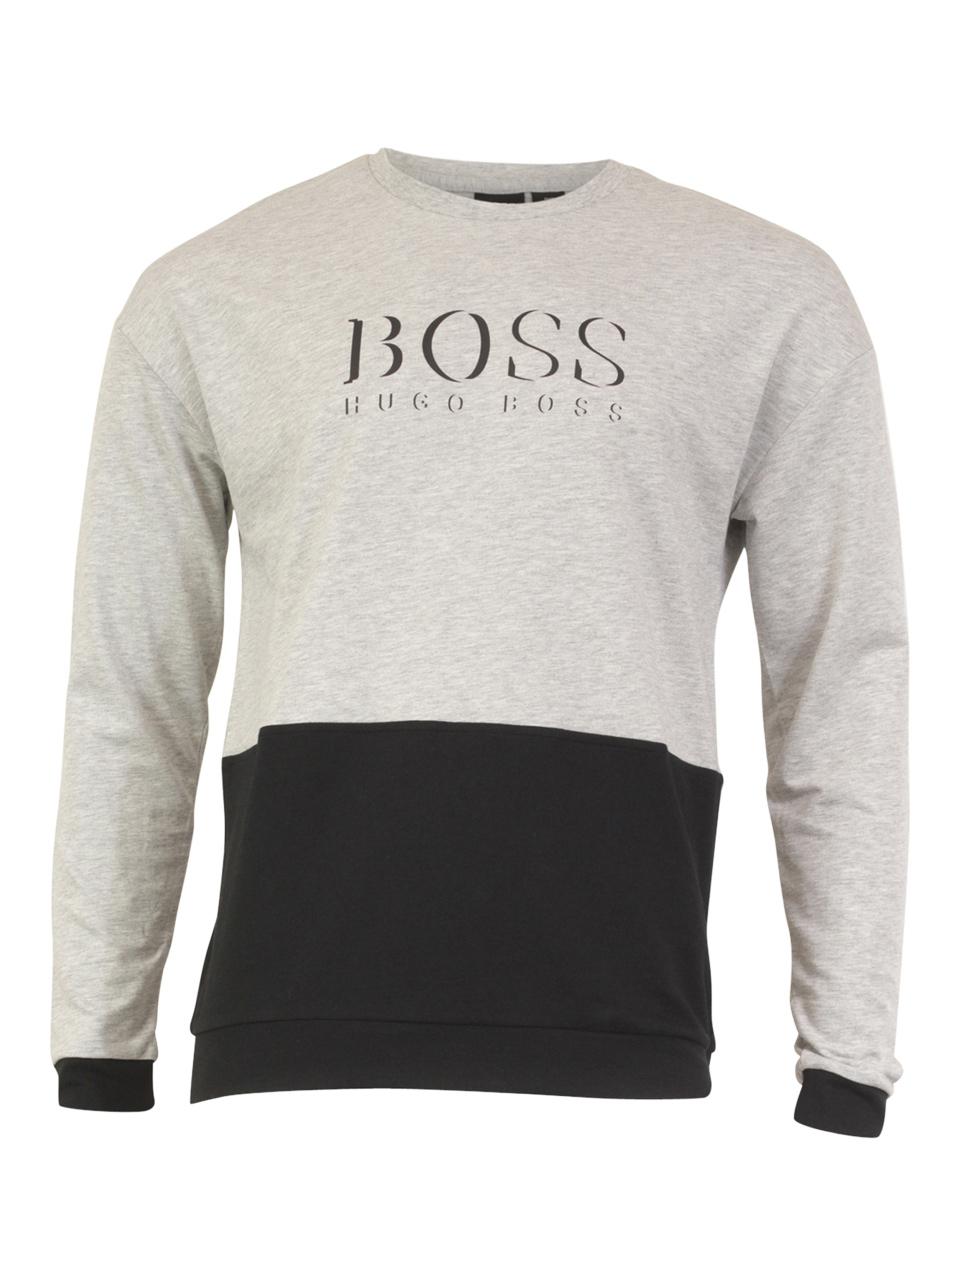 Hugo Boss Men's Authentic Long Sleeve Crew Neck Cotton Sweatshirt